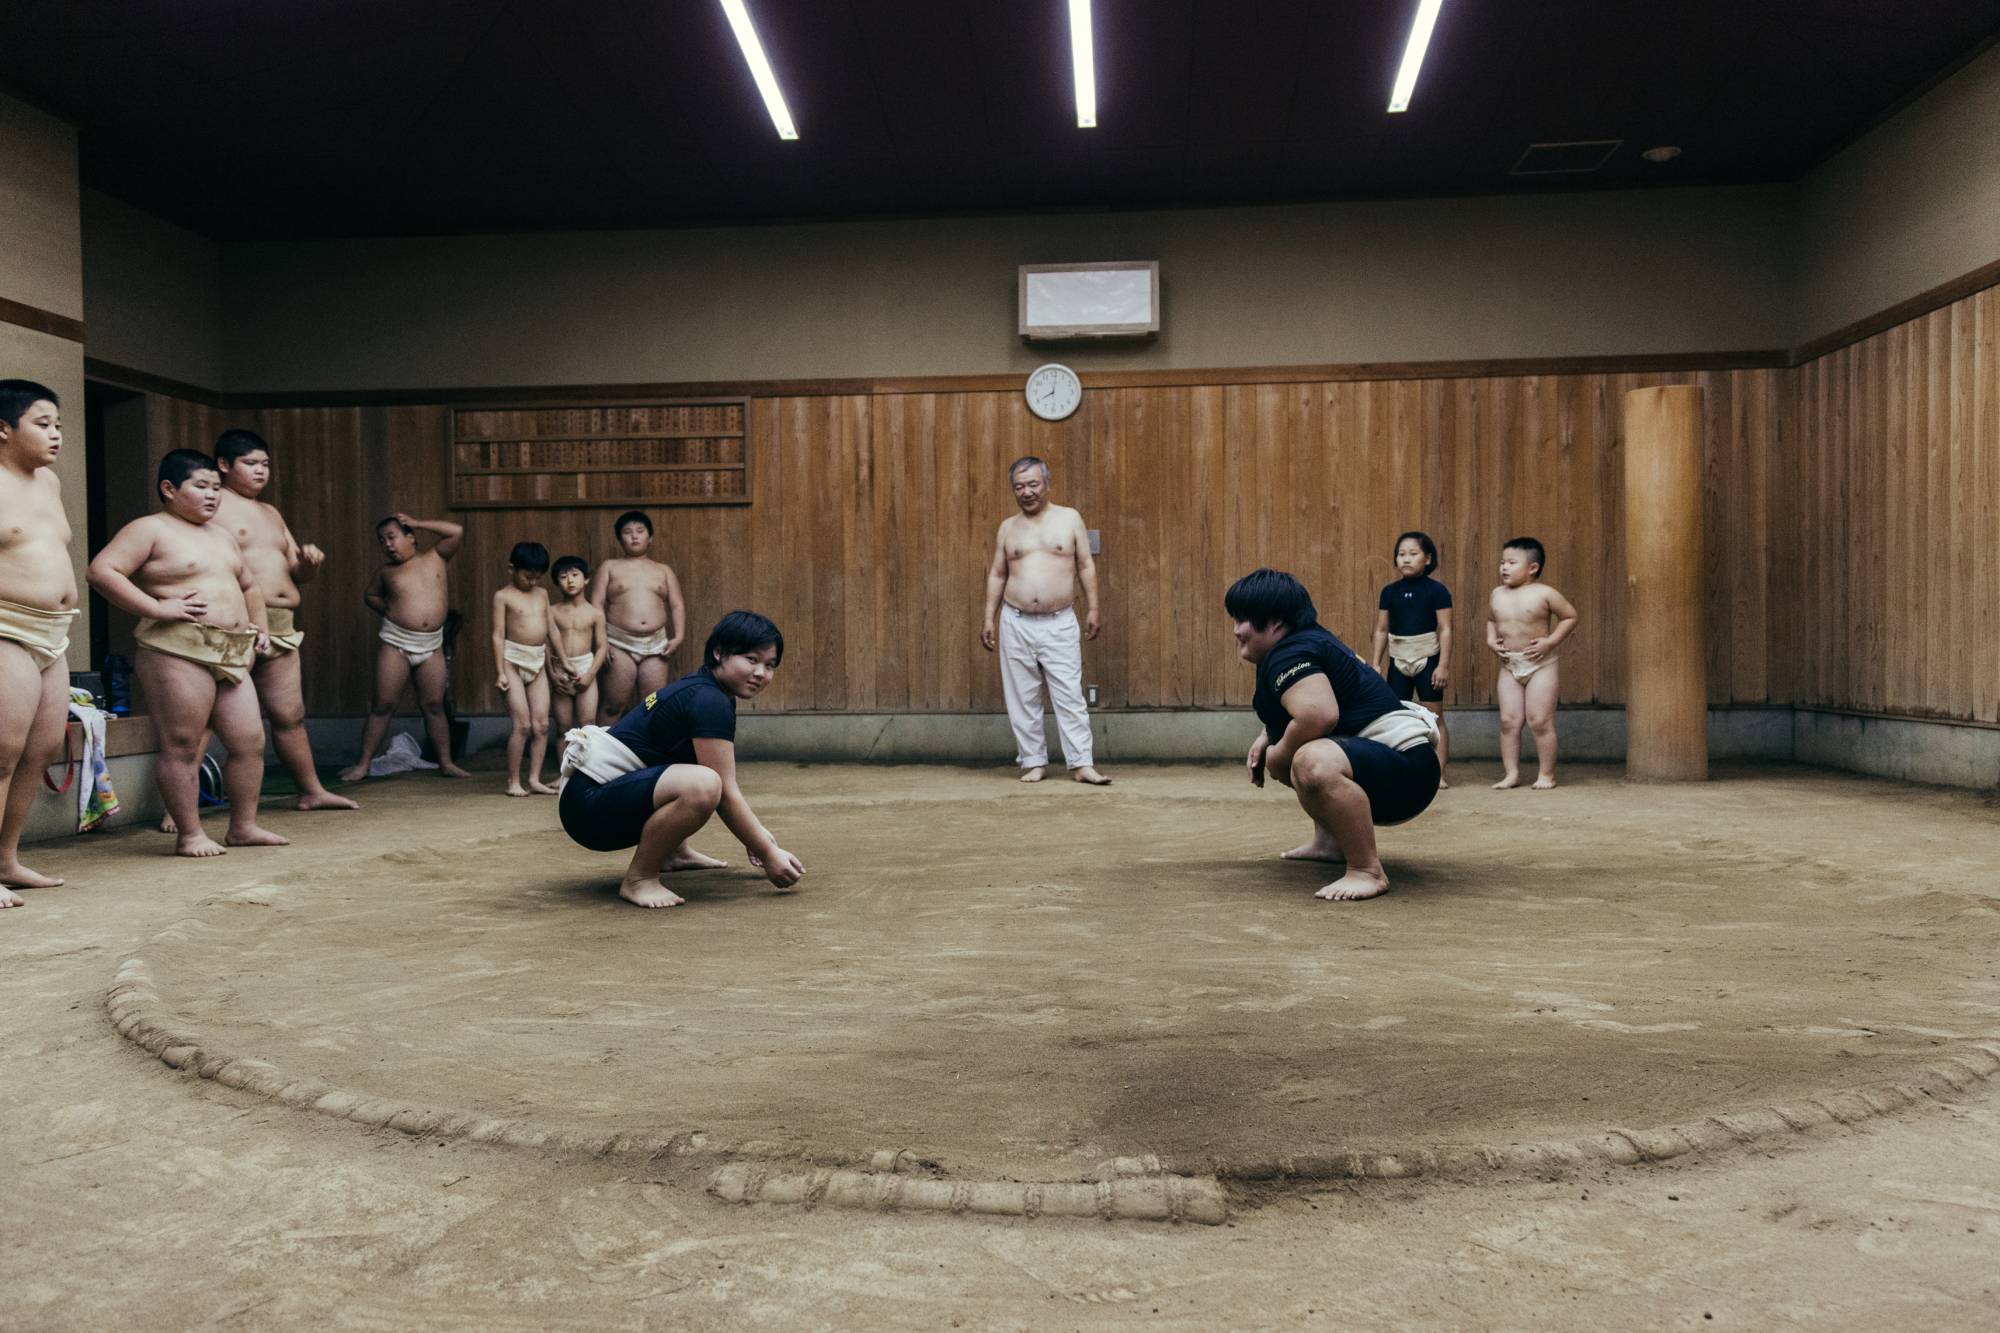 Yulia Skogoreva’s award-winning project “Salt and Tears” features female sumo wrestlers in the ring. | © YULIA SKOGOREVA